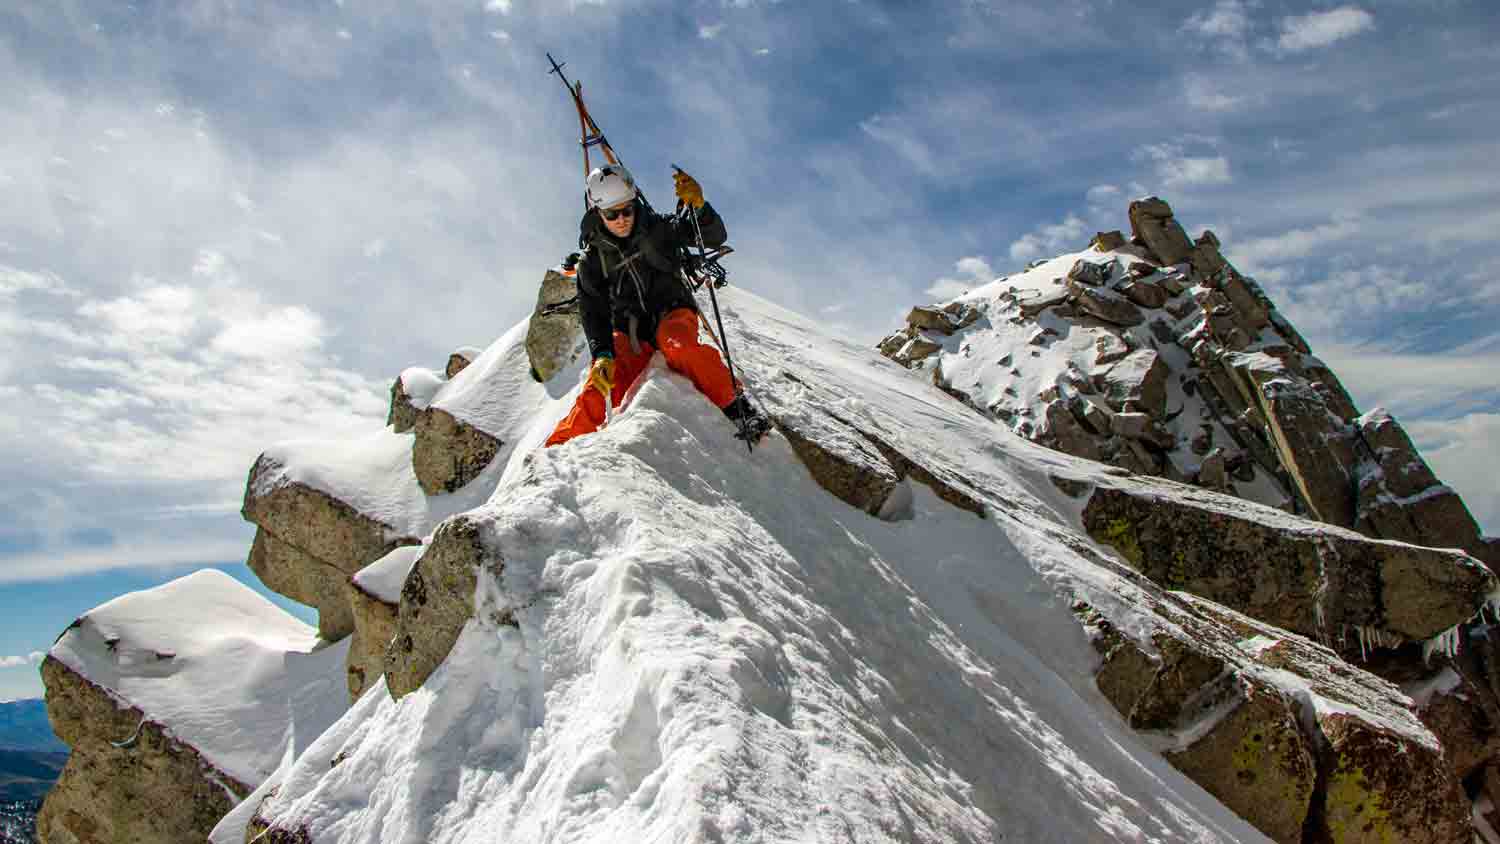 Ski Mountaineering Lone Peak